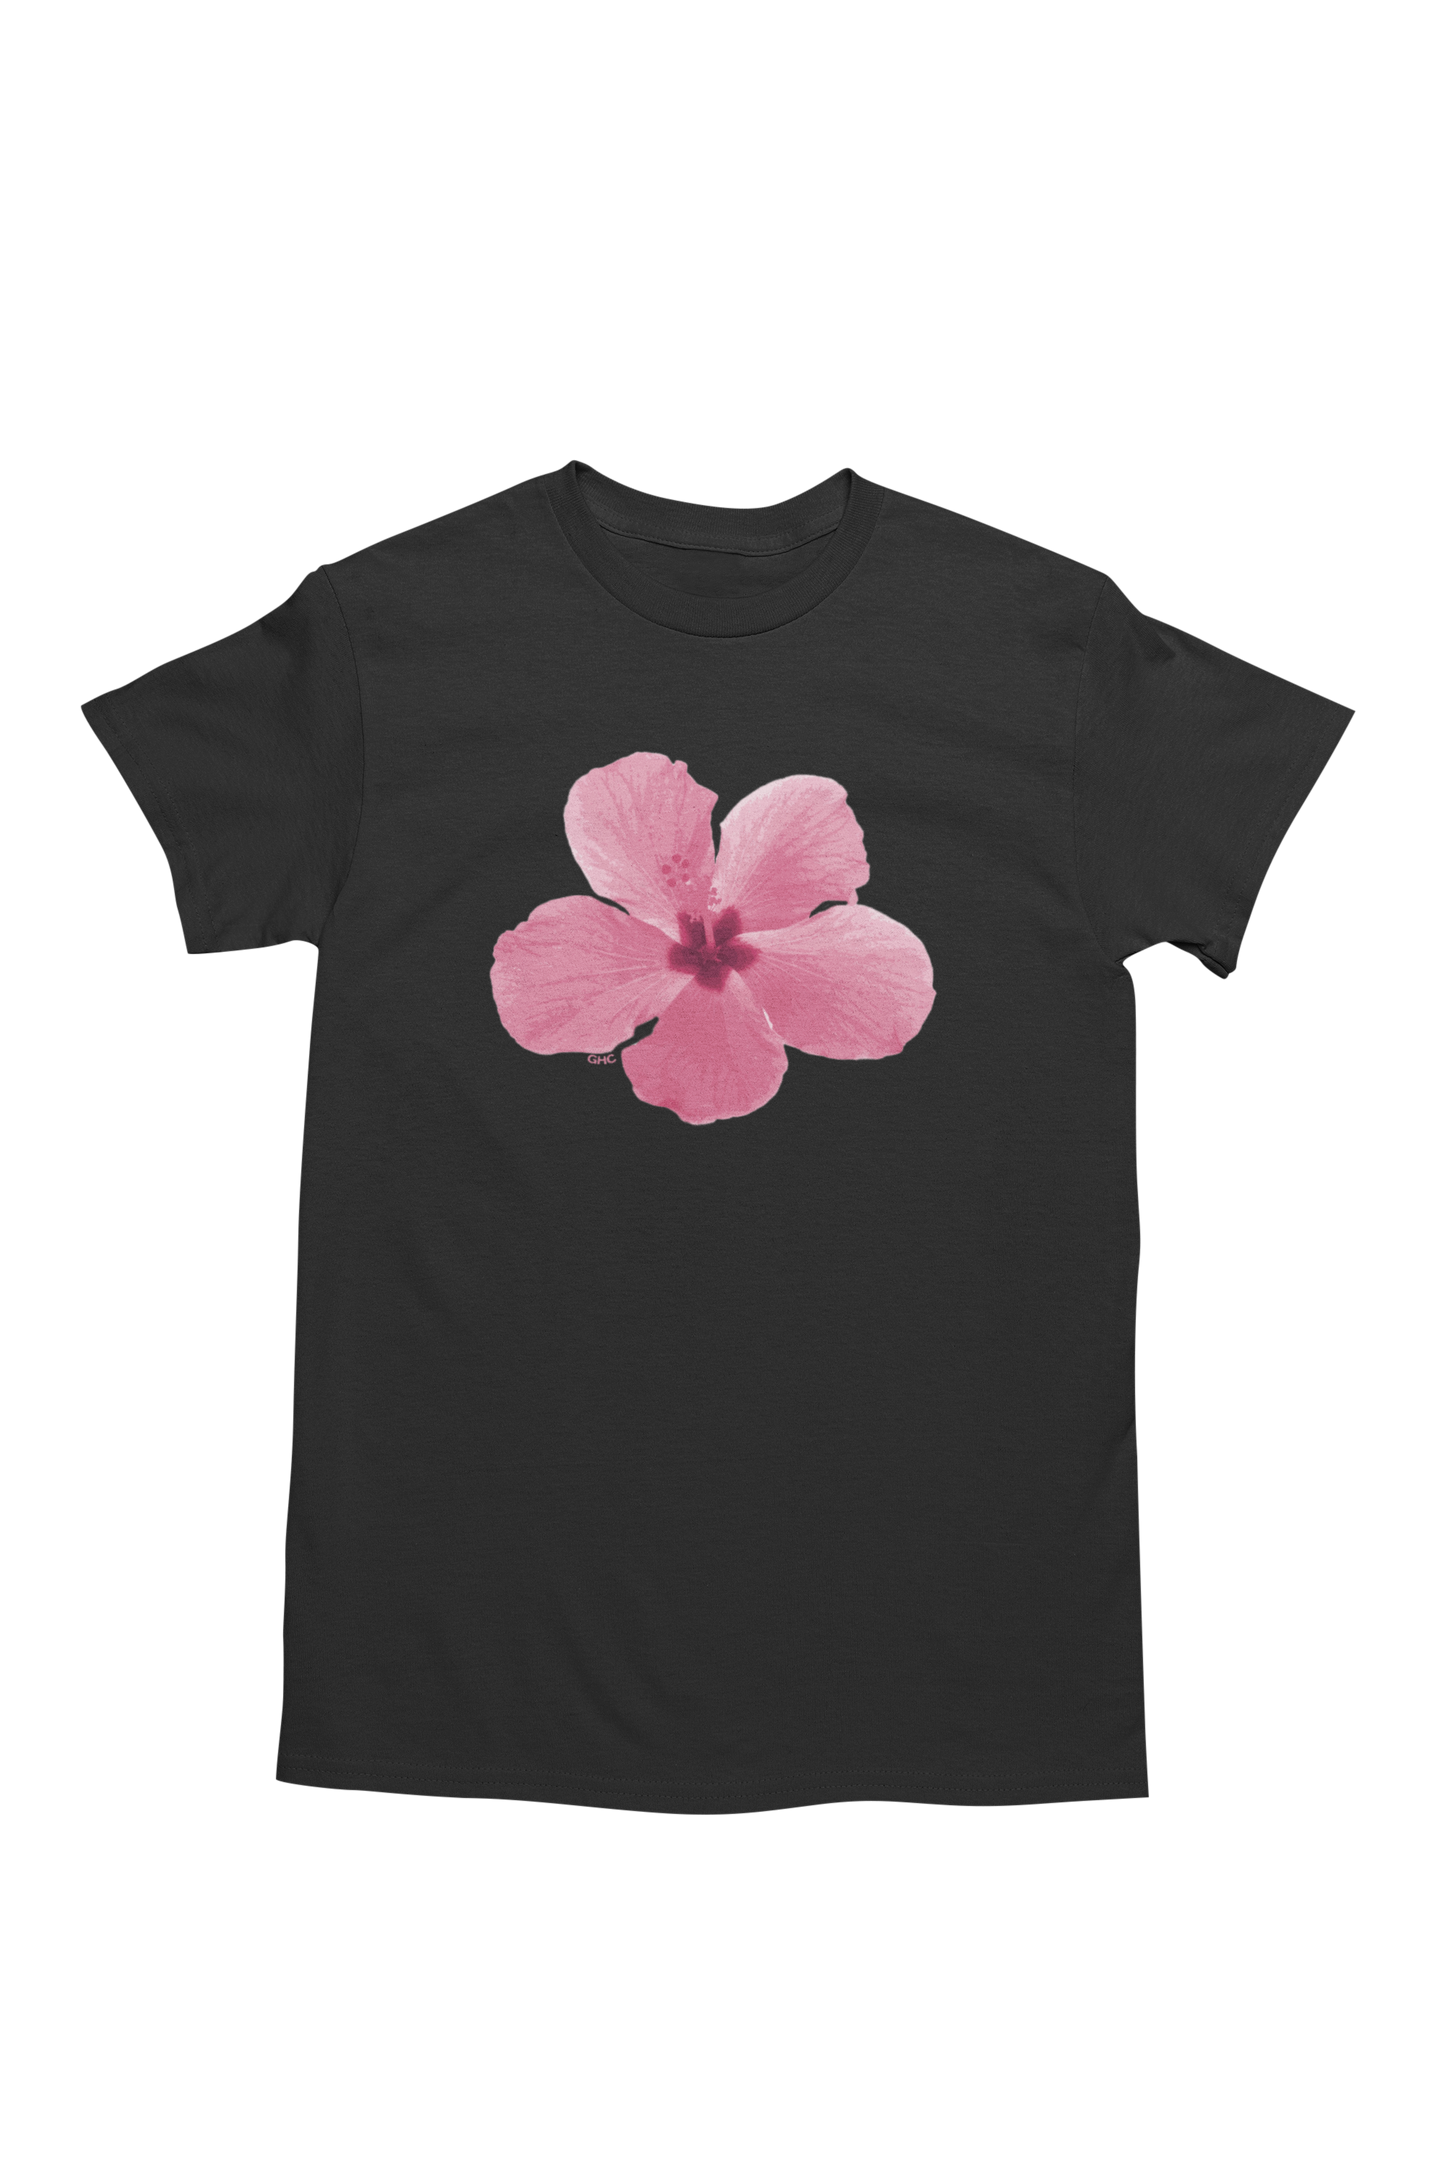 Good Hearts Club - Pink Hibiscus Tee Shirt